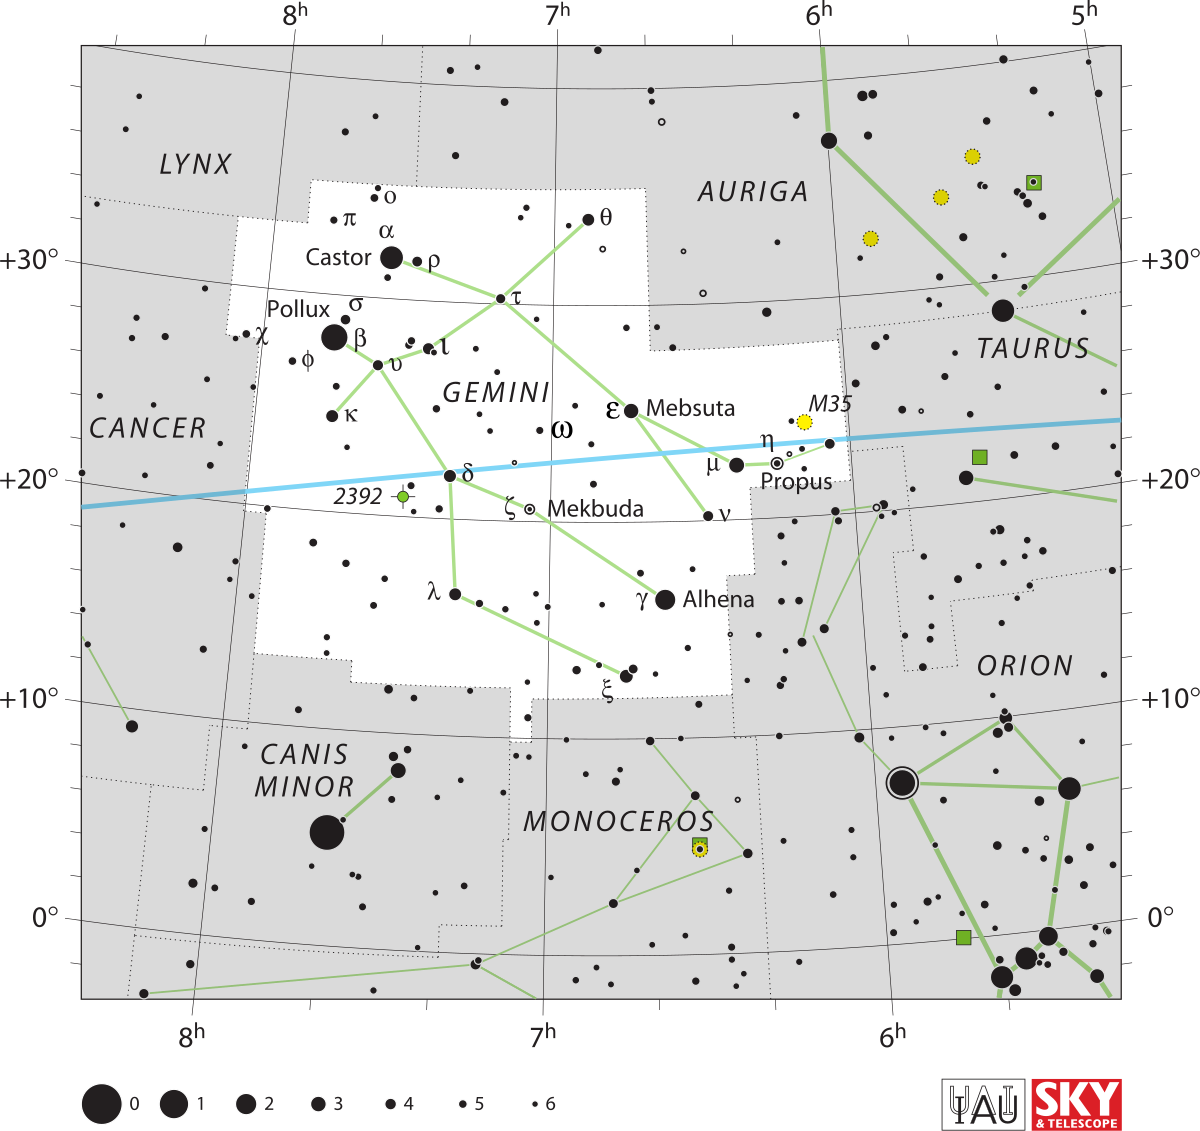 Gemini Star Chart